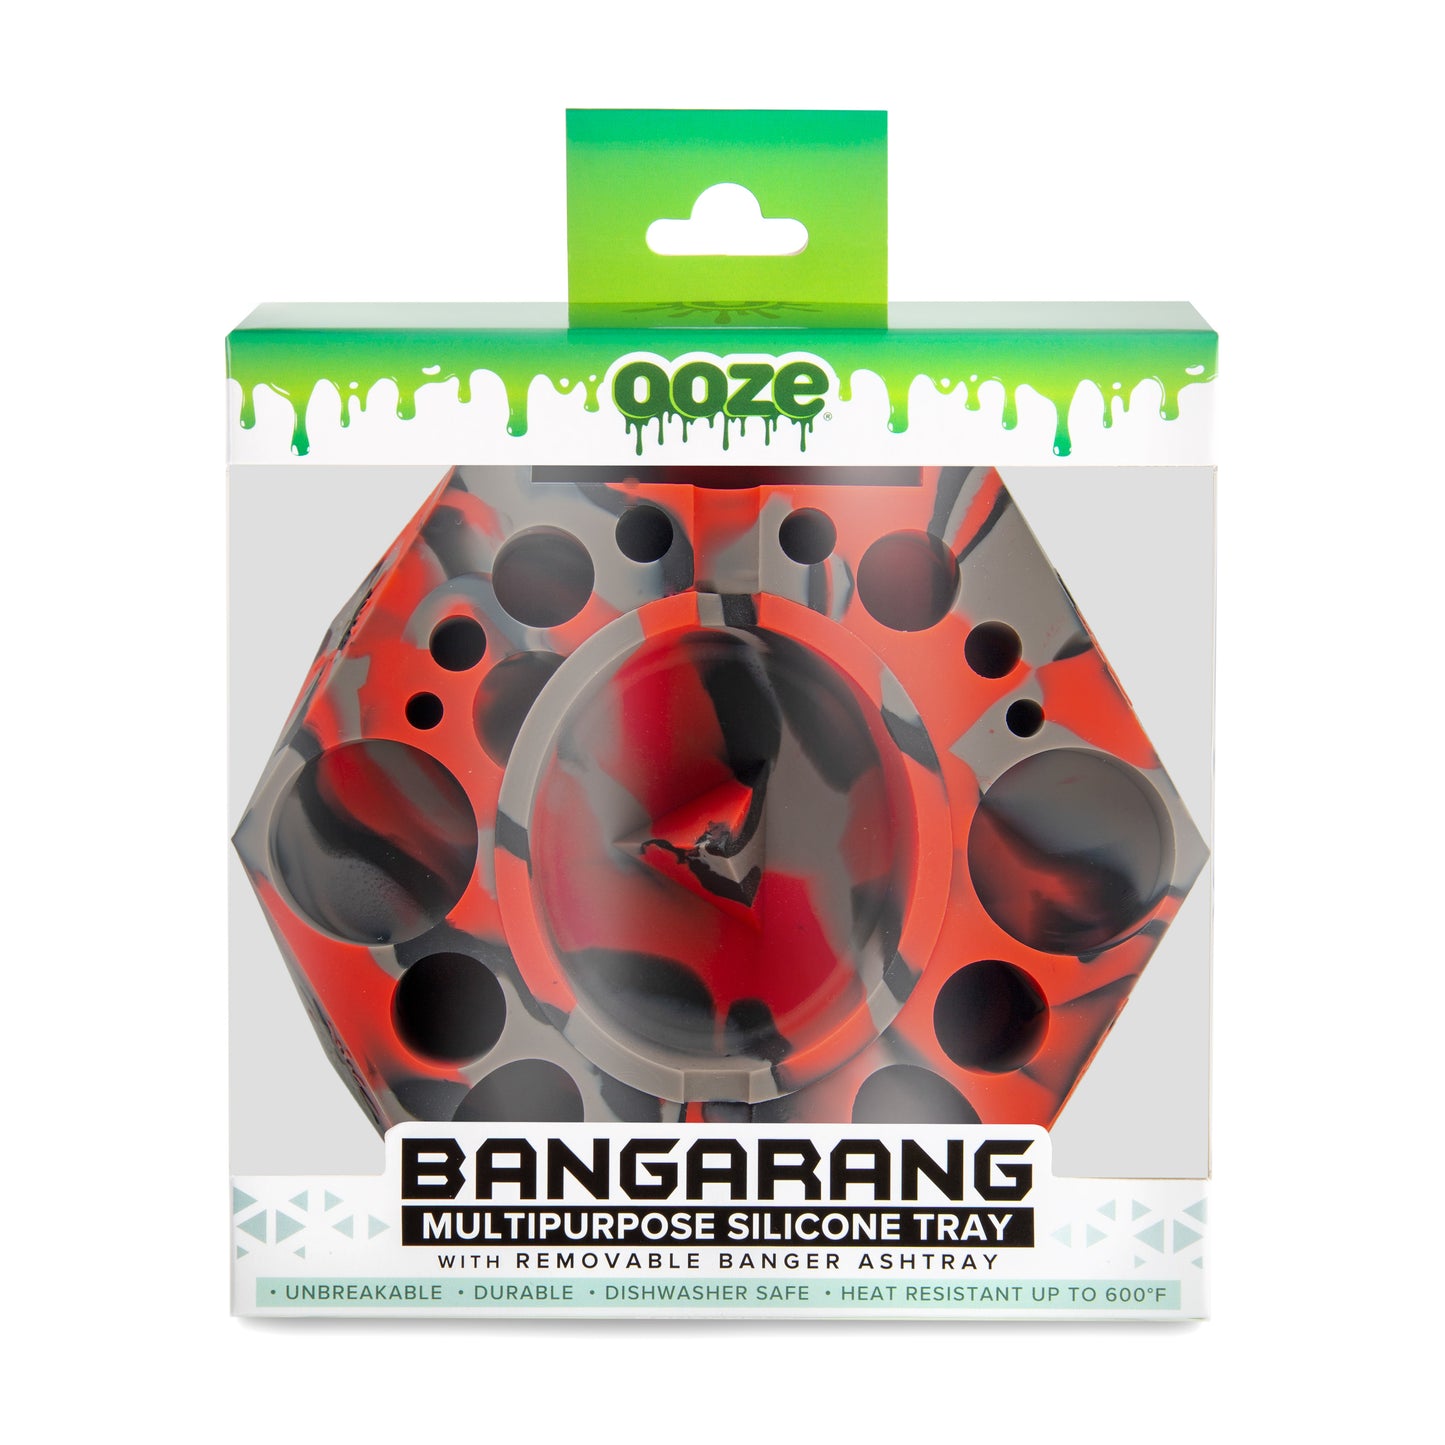 Ooze Bangarang - After Midnight